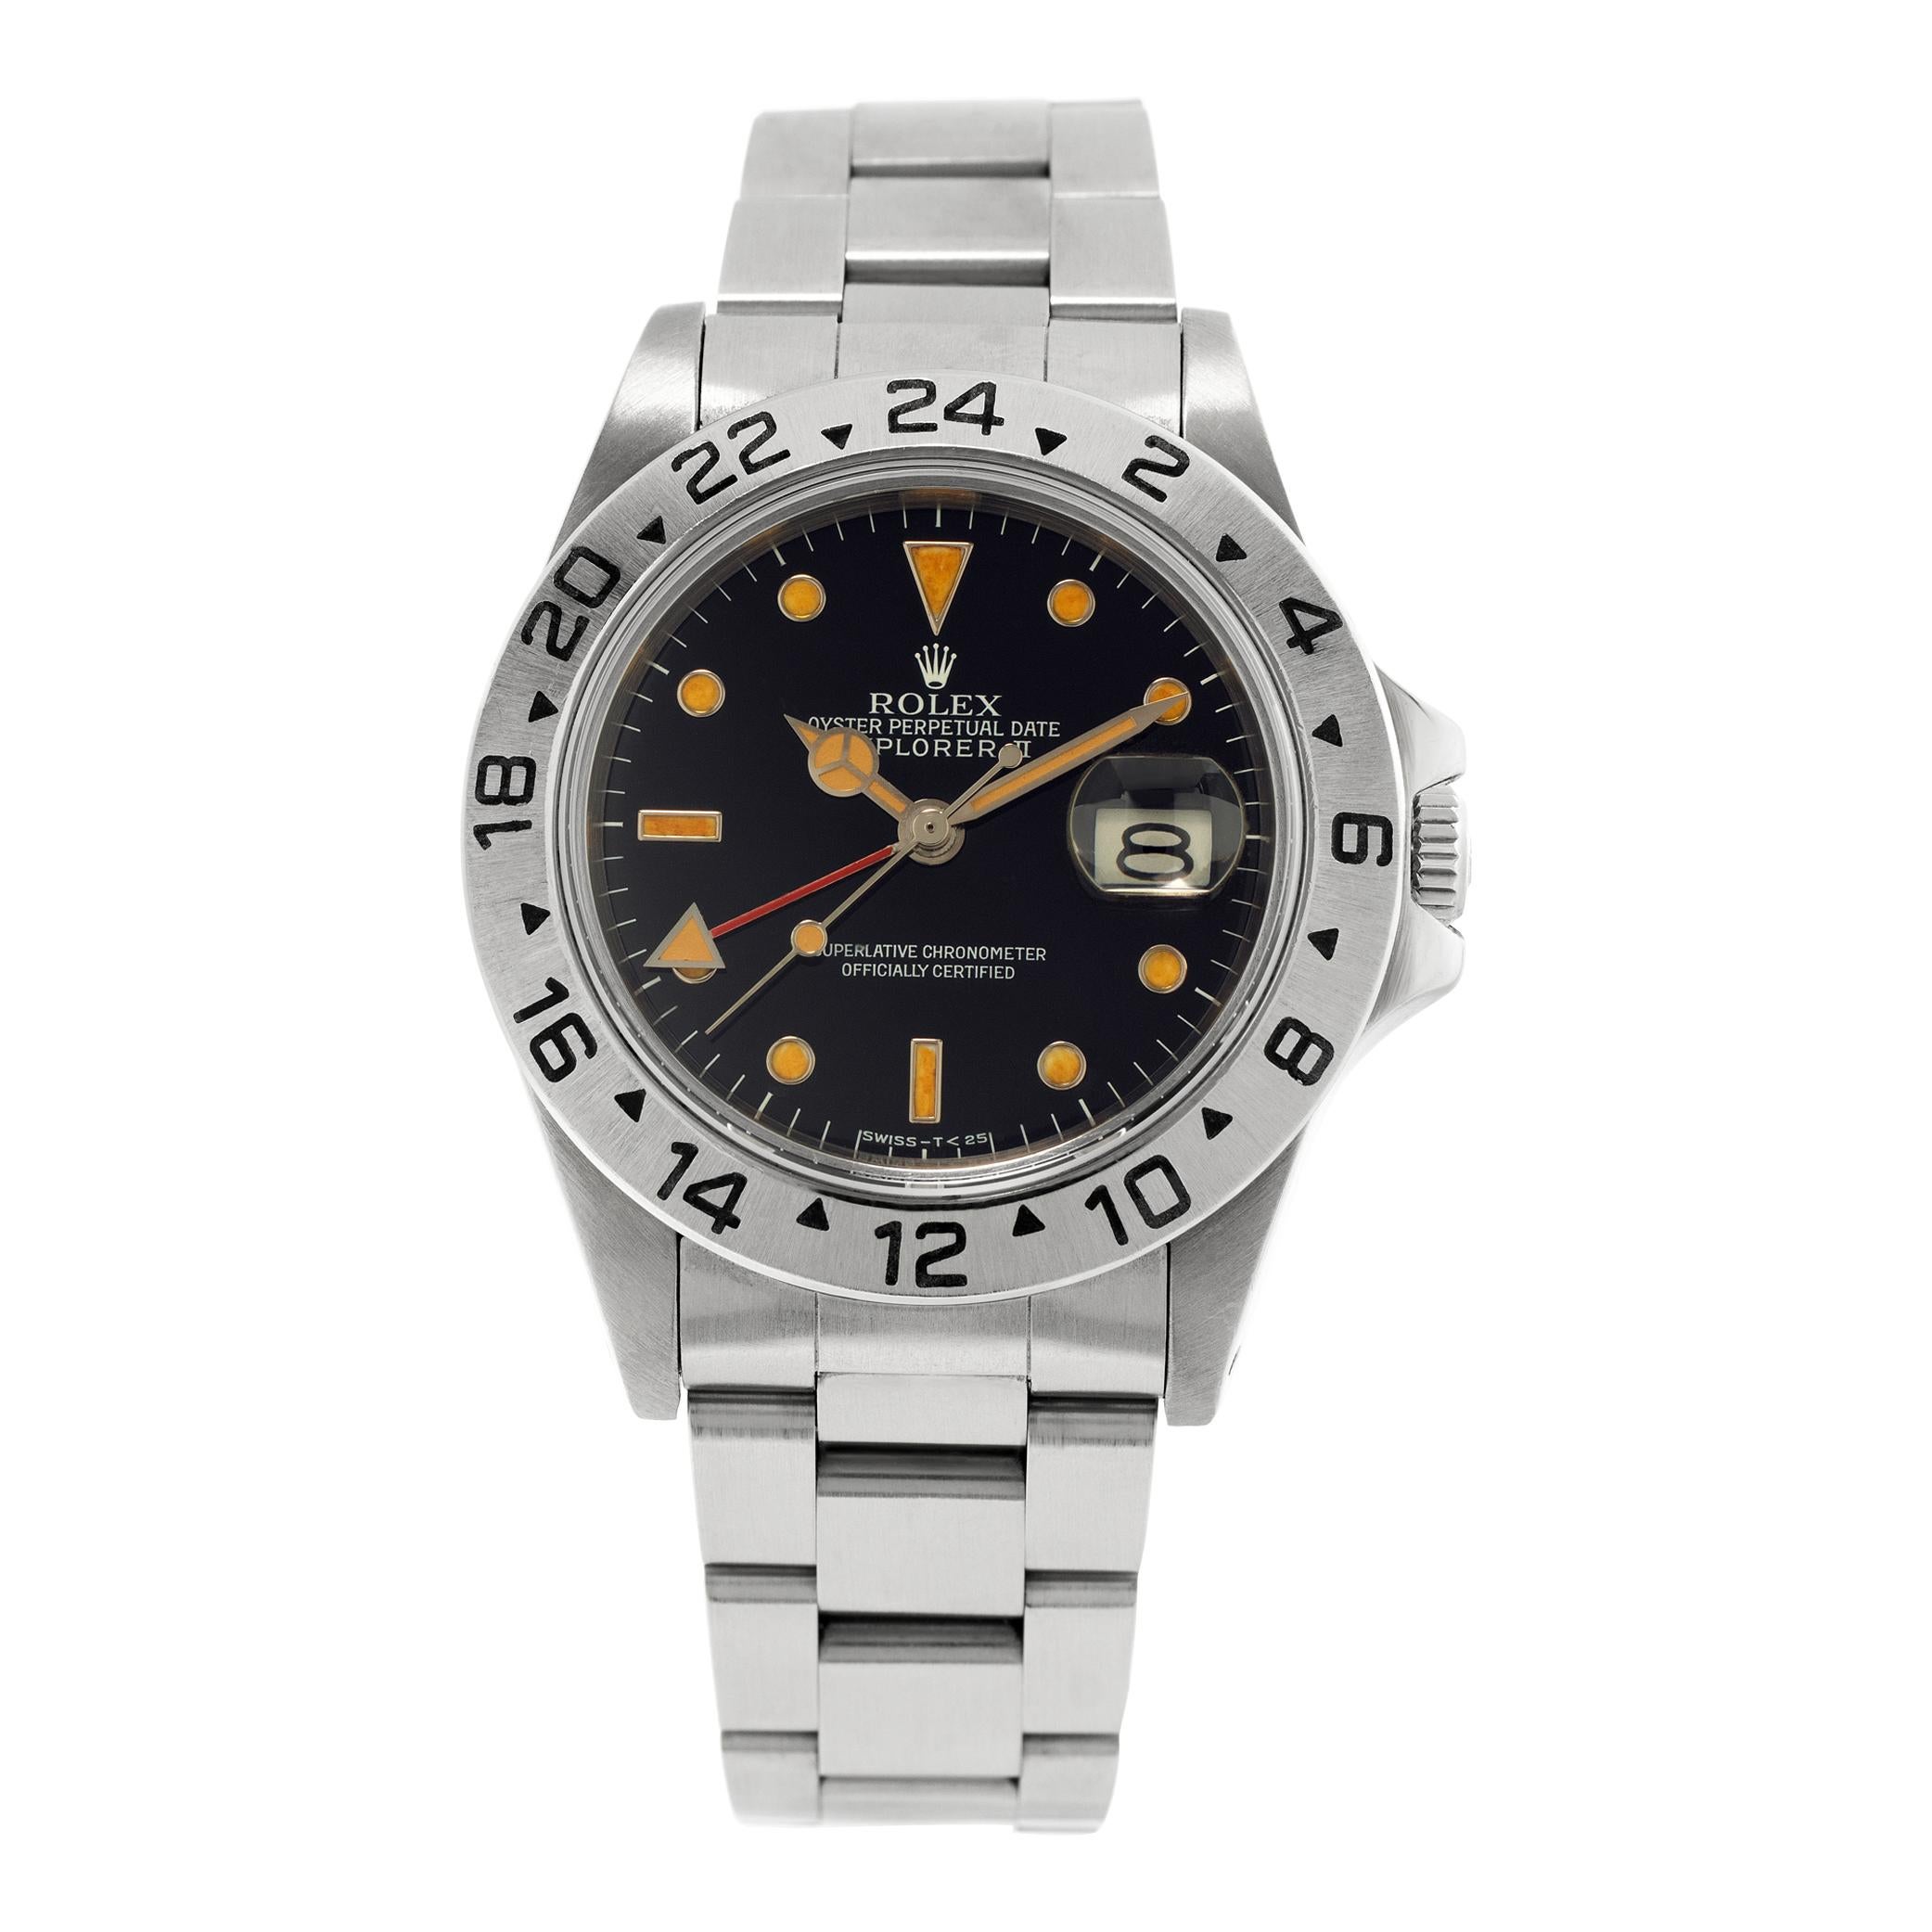 Rolex Explorer II stainless steel Automatic Wristwatch Ref 16550